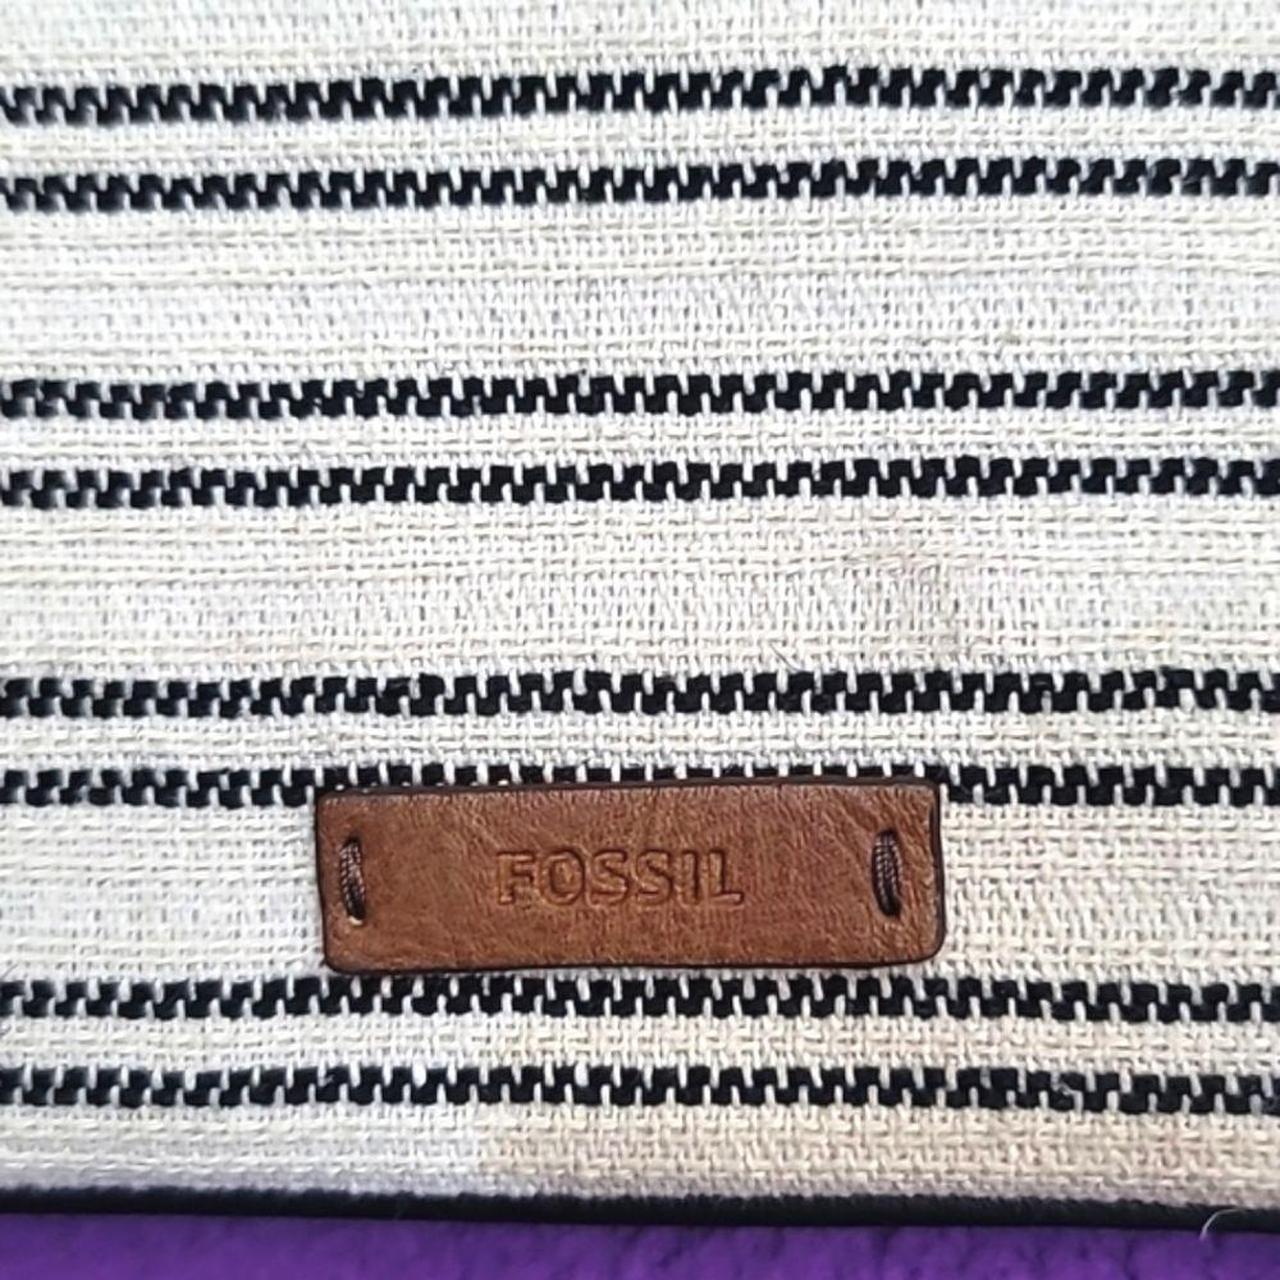 Product Image 2 - striped Fossil crossbody handbag. Good